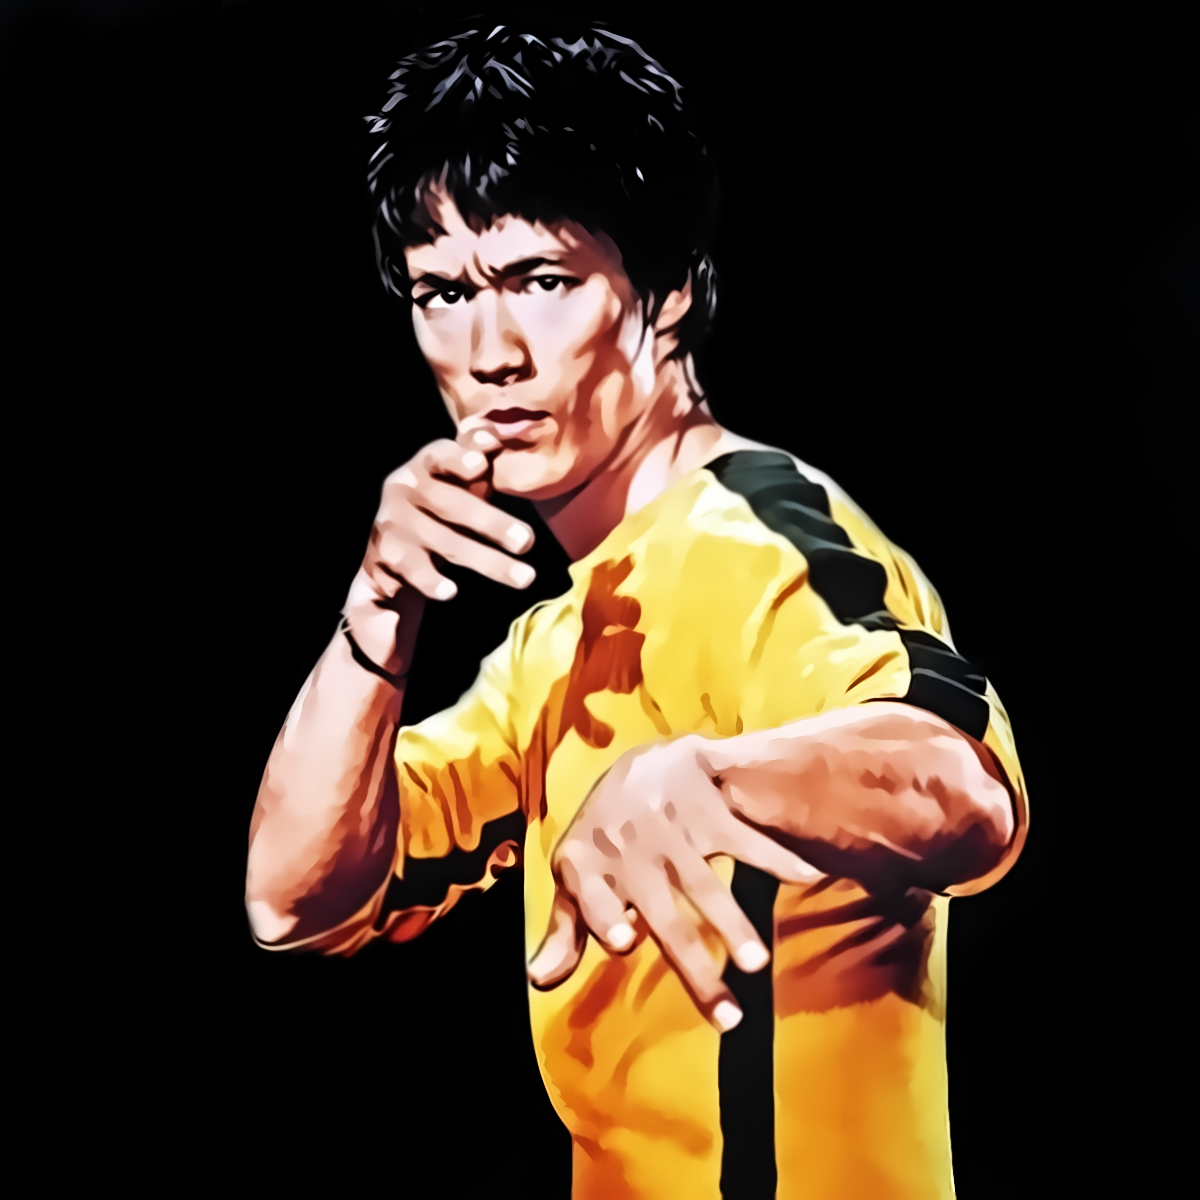 HD WALLPAPER: Bruce Lee - The Legend Set 1